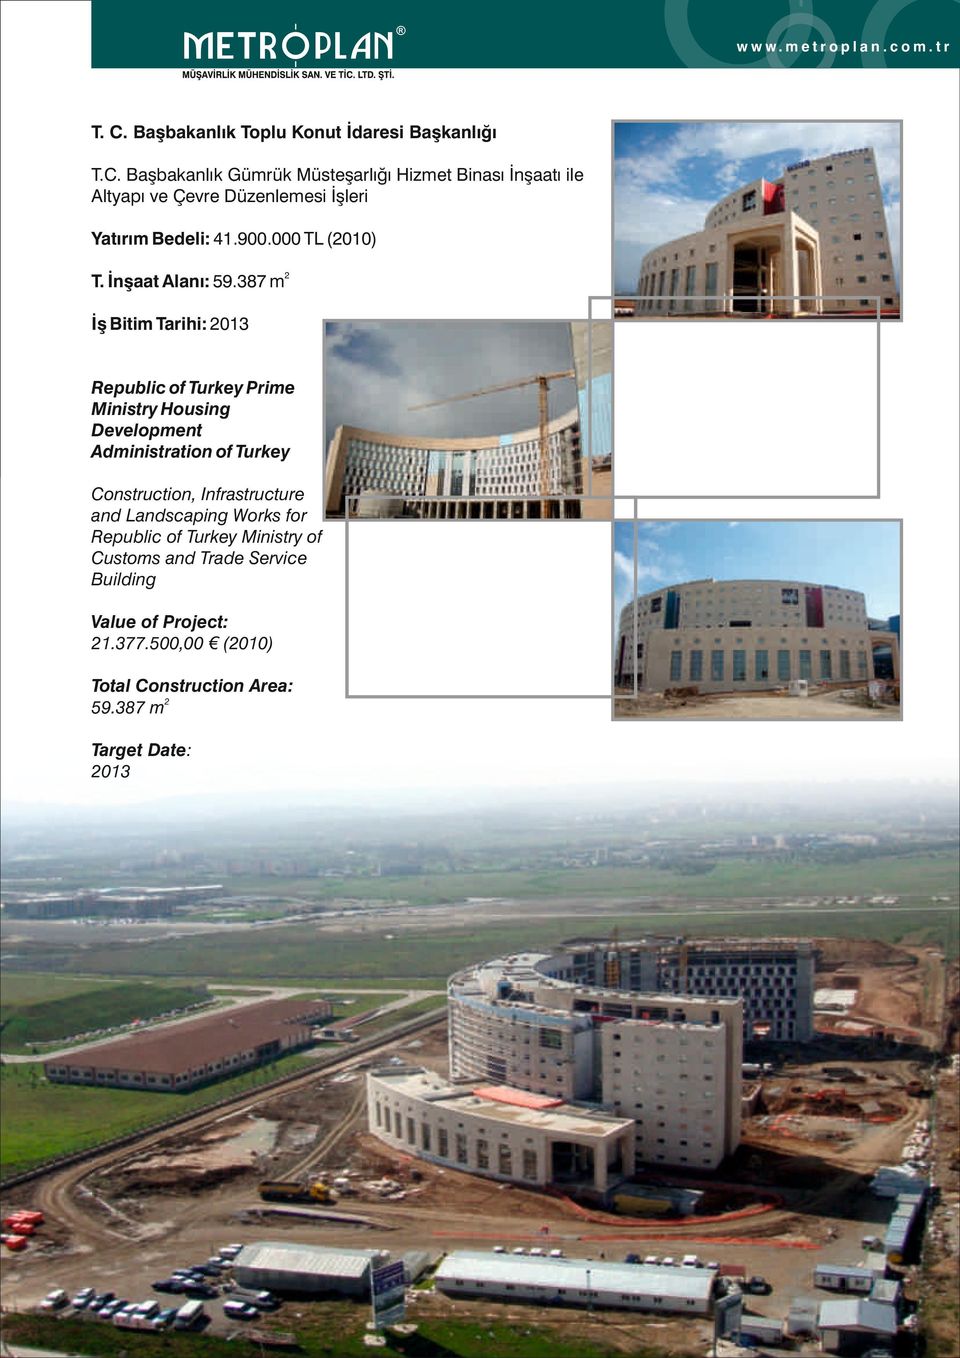 387 m İş Bitim Tarihi: 013 Republic of Turkey Prime Ministry Housing Development Administration of Turkey Construction,